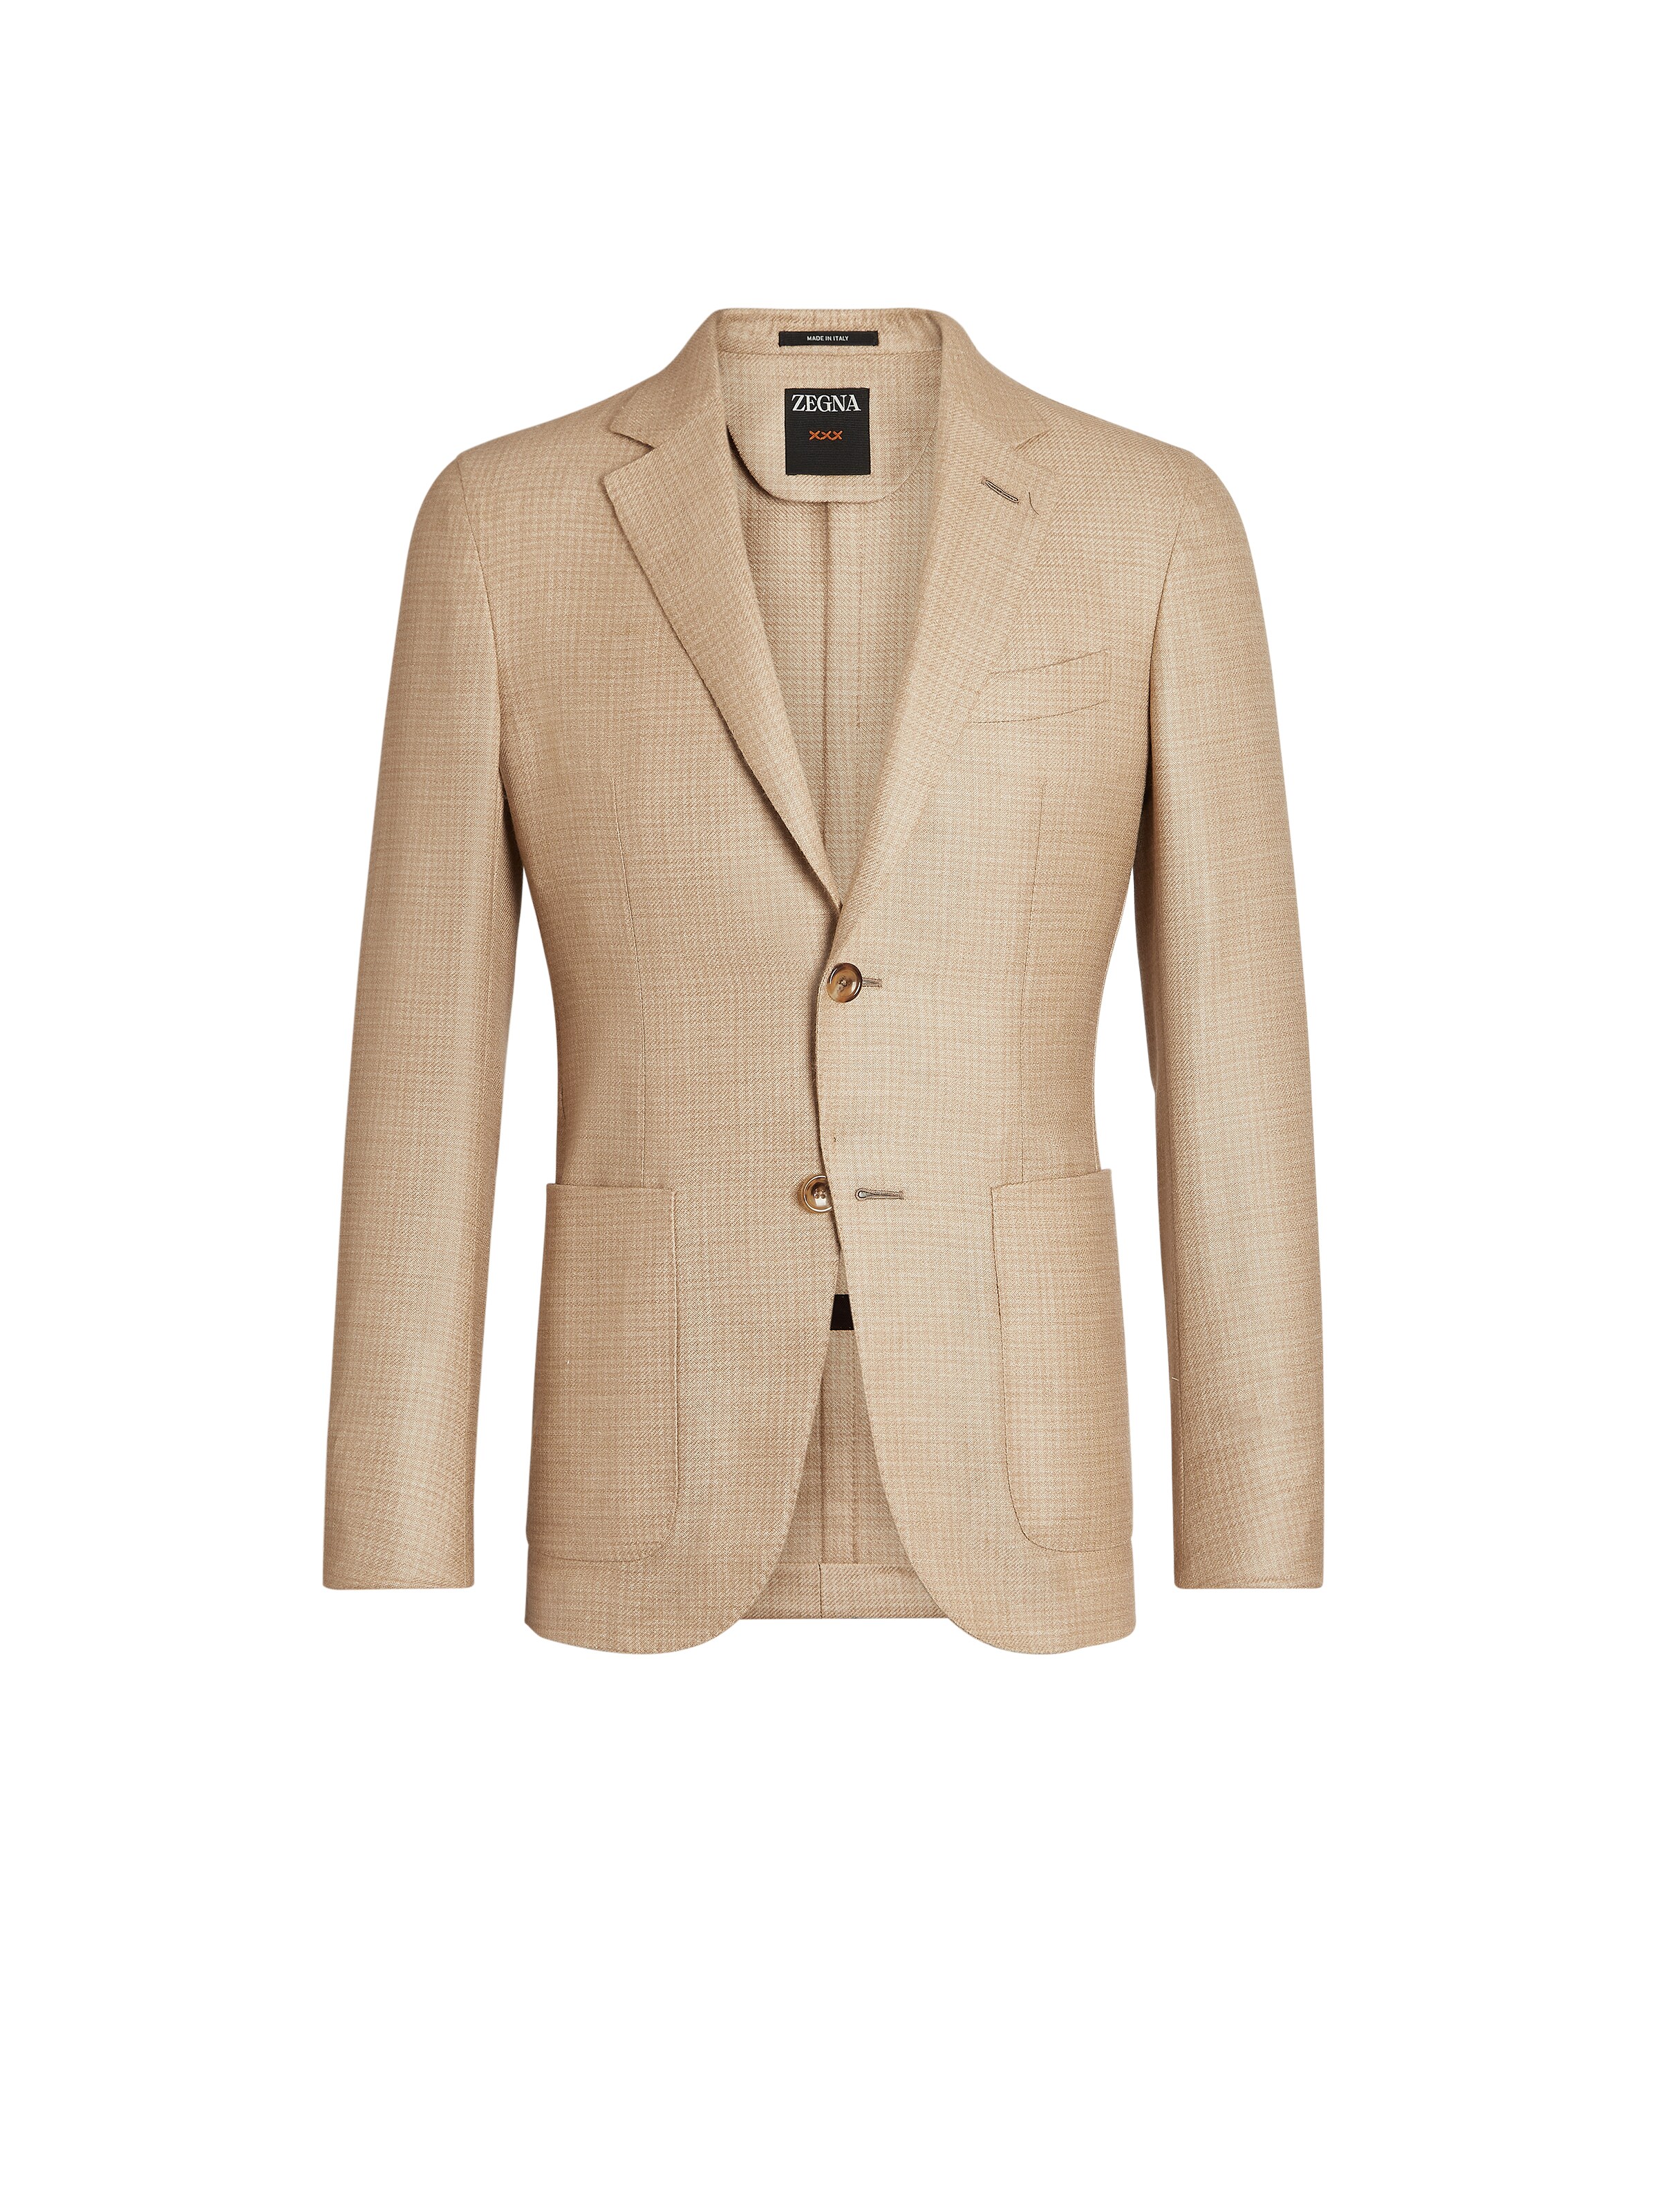 Zegna Cashmere And Silk Regular Fit Cardigan Jacket In Beige/ivory